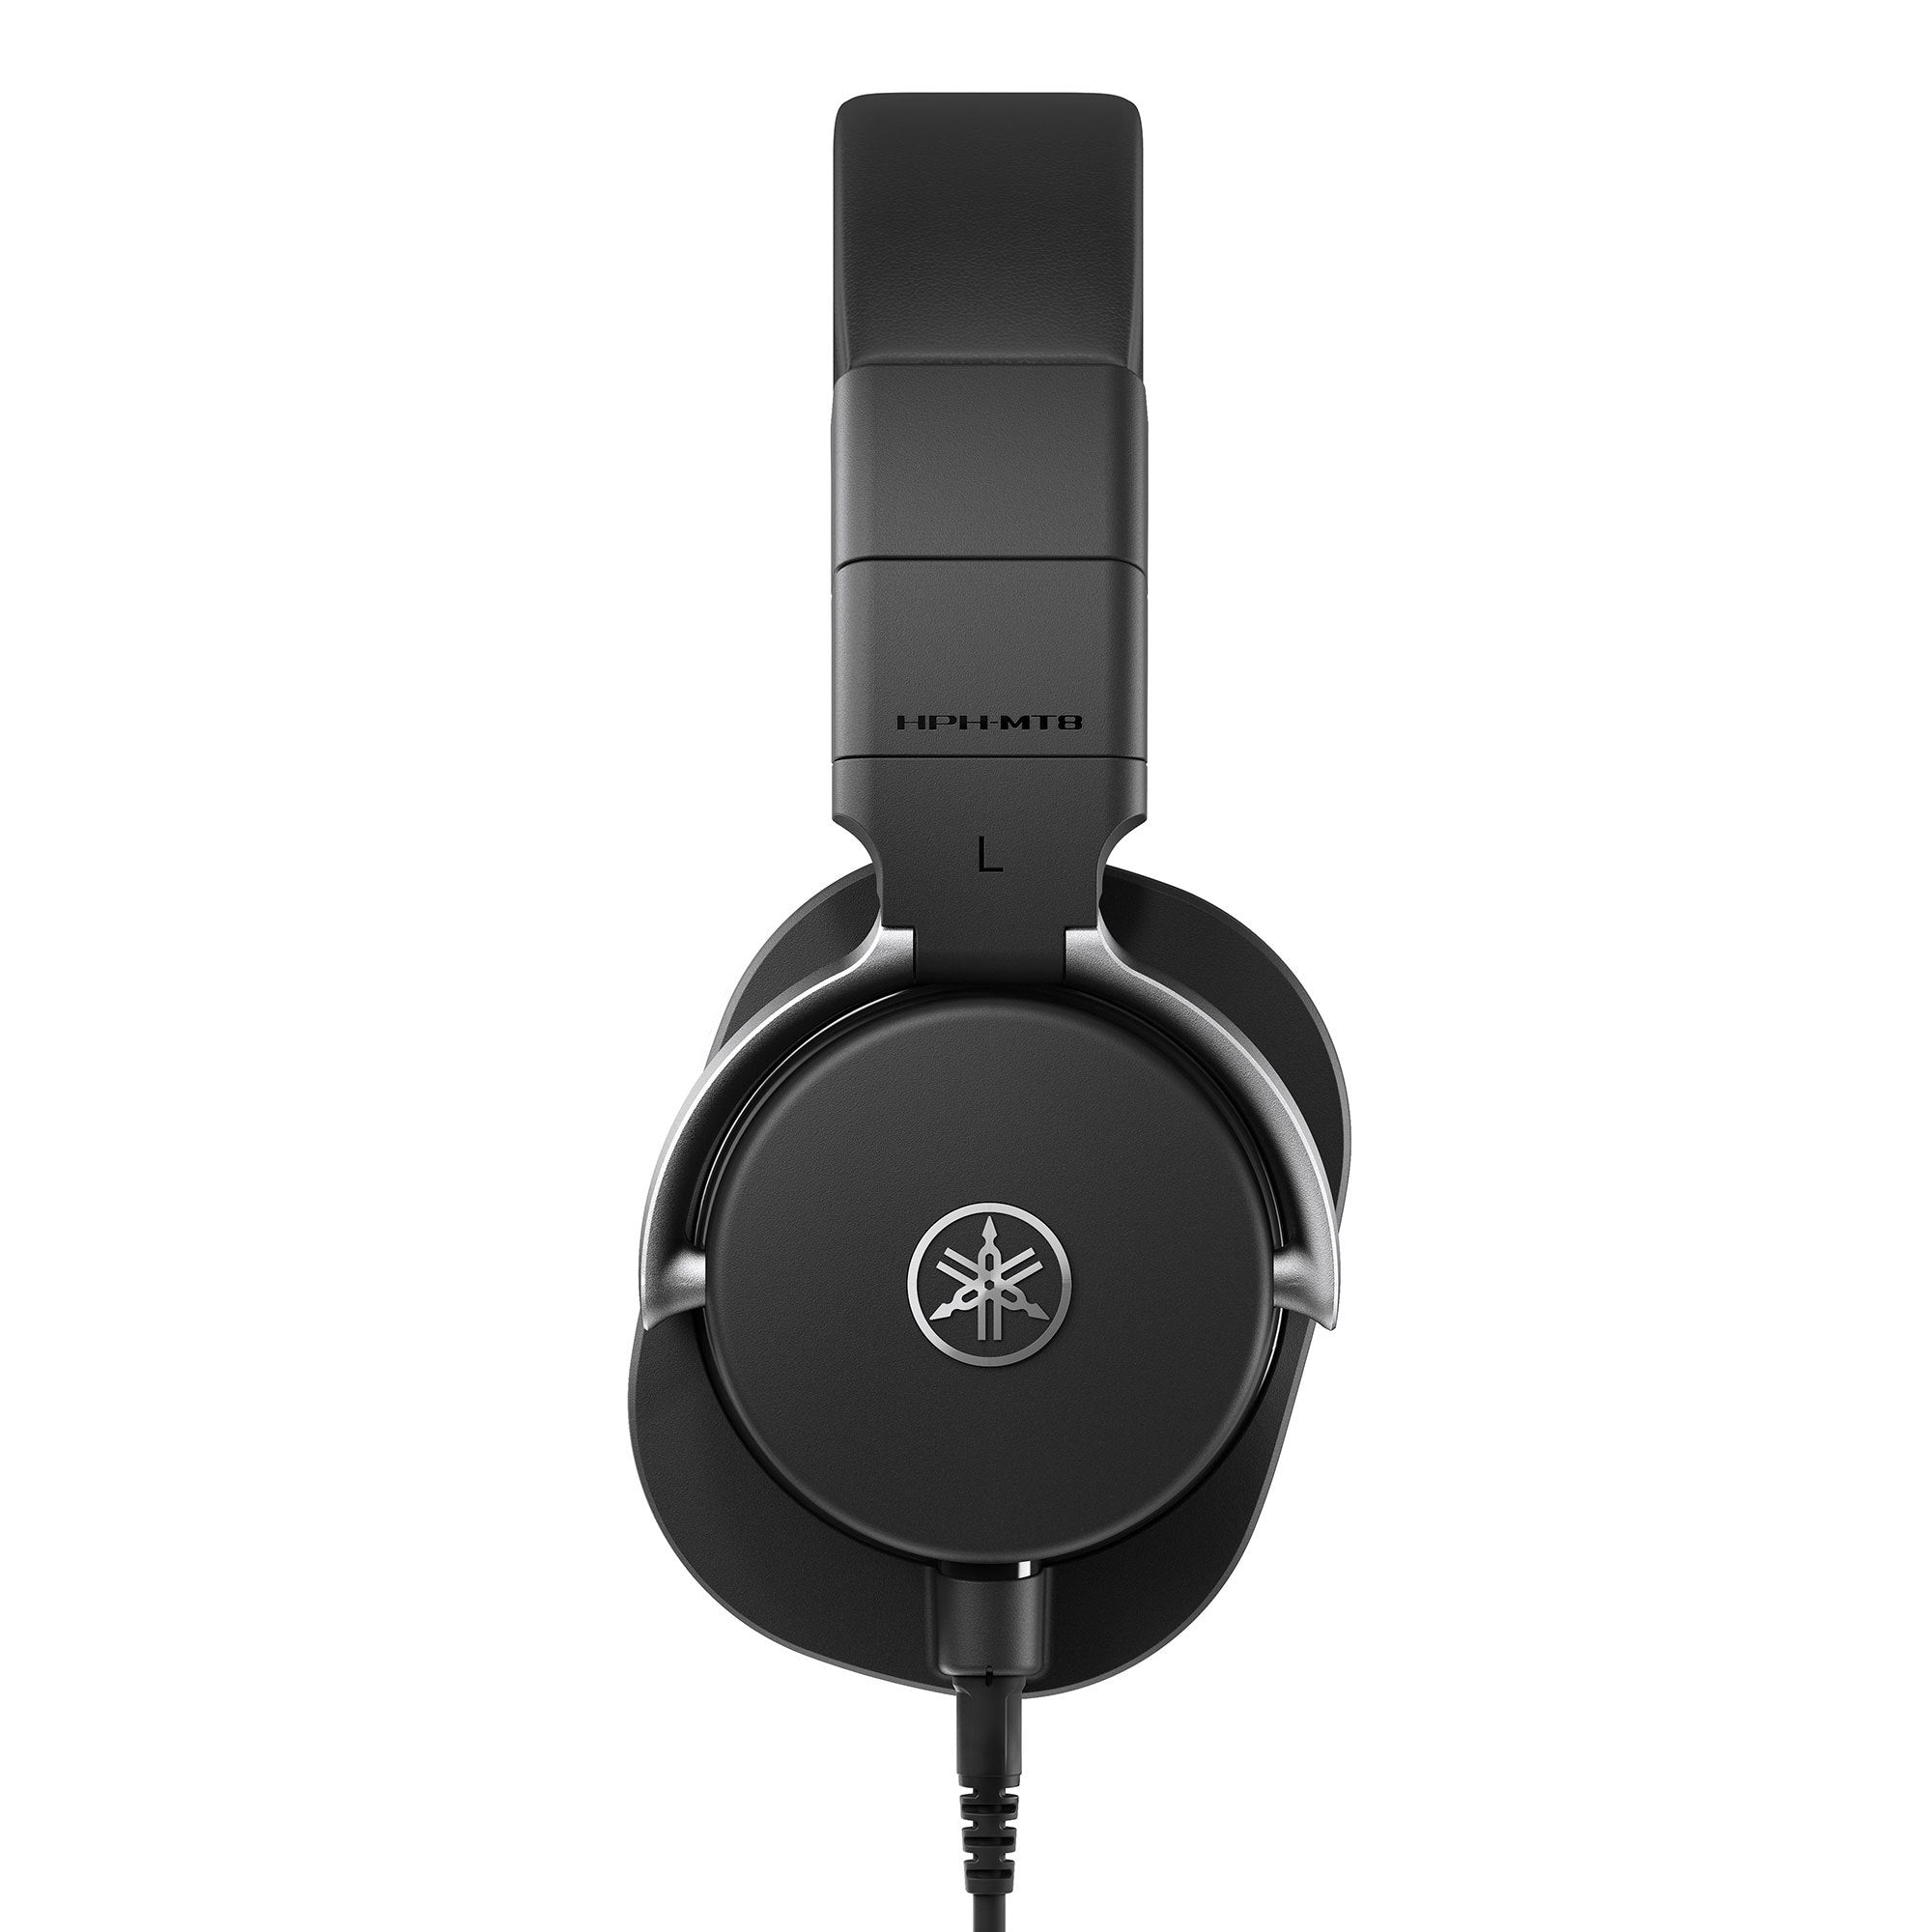 Yamaha HPH-MT8 Studio Monitor Over-Ear Headphones/ Black